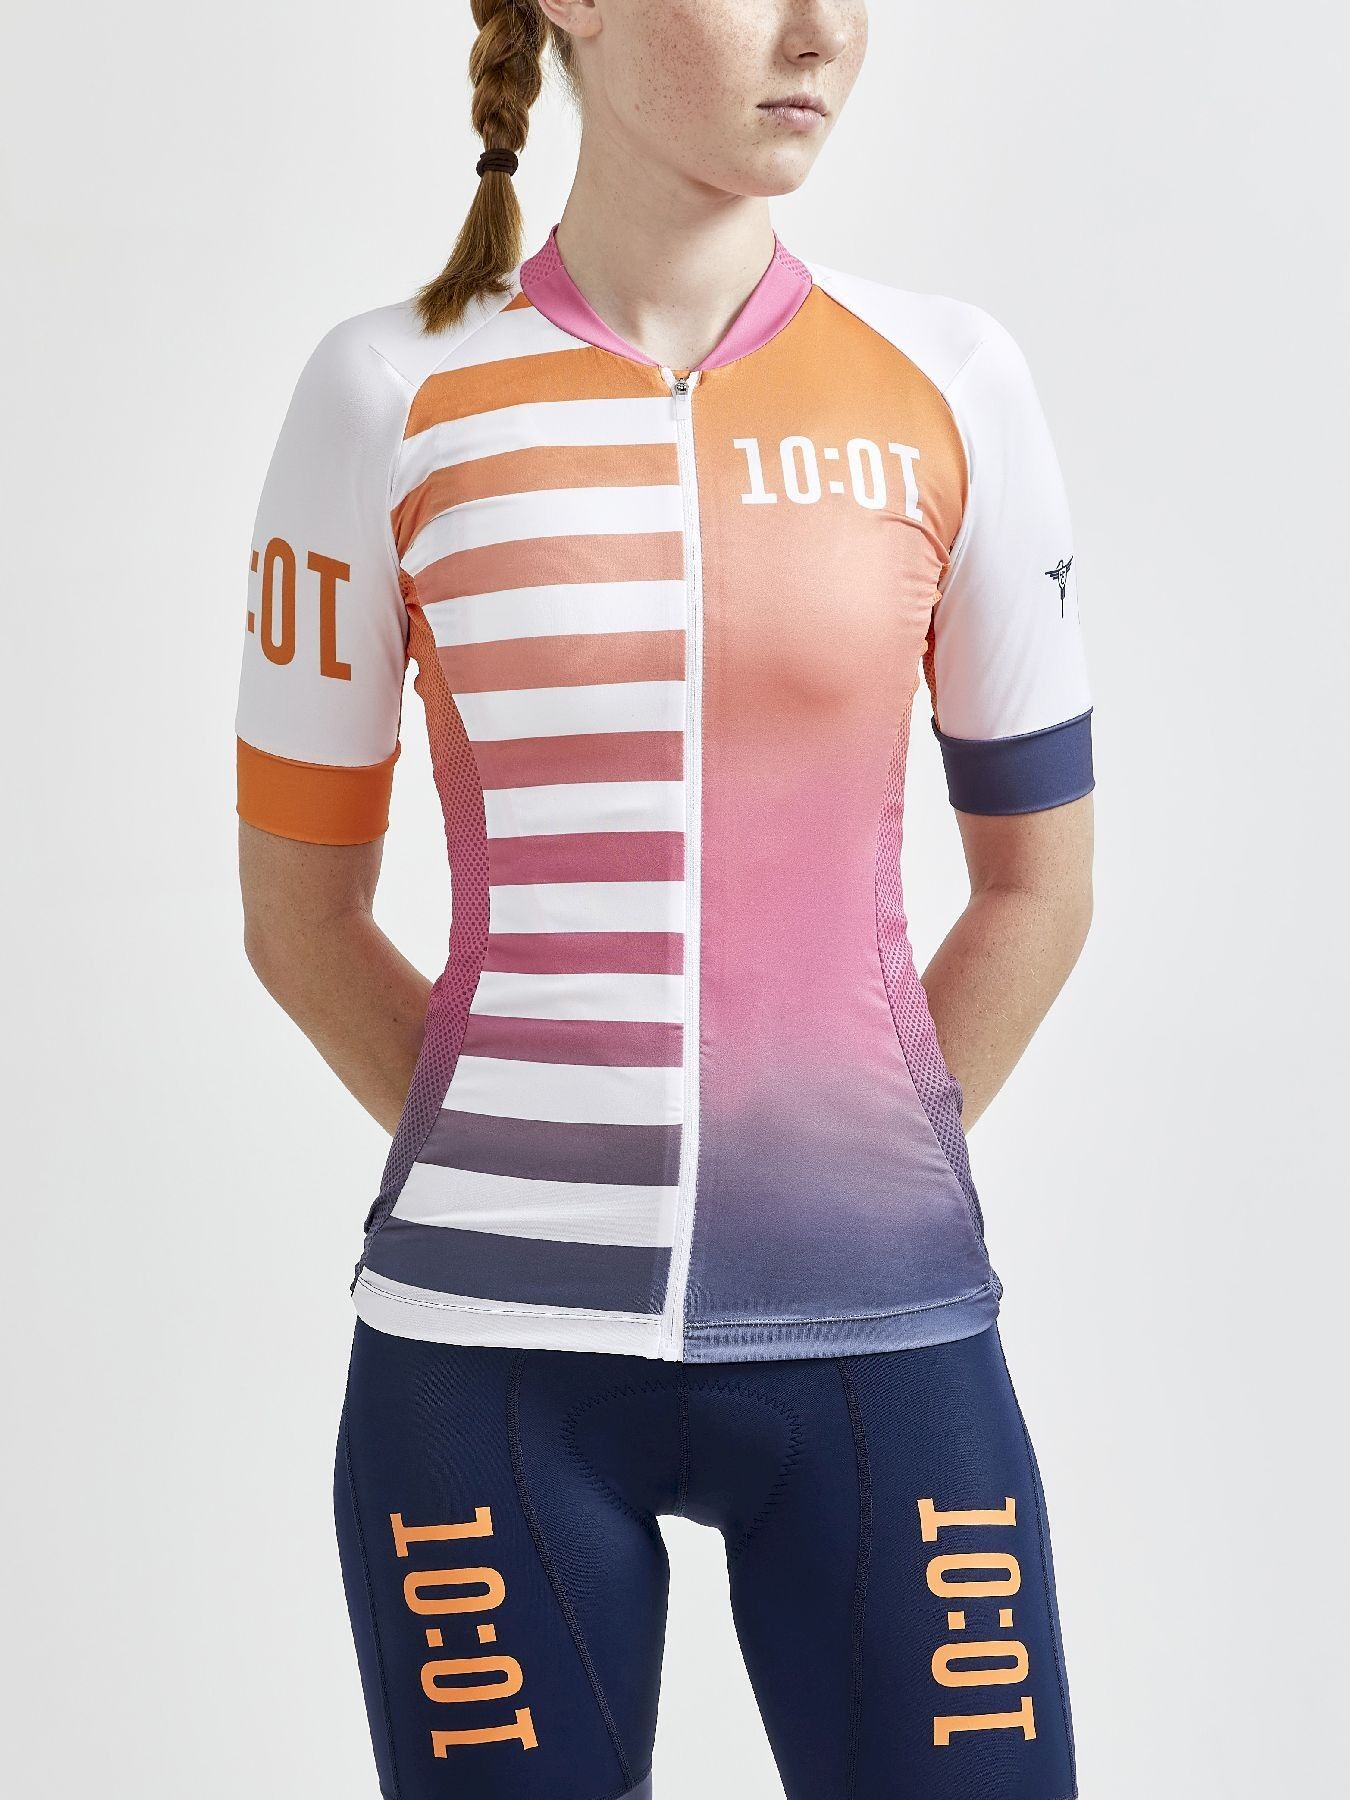 Craft Adv Hmc Endurance Graphic Jersey - Cycling jersey - Women's